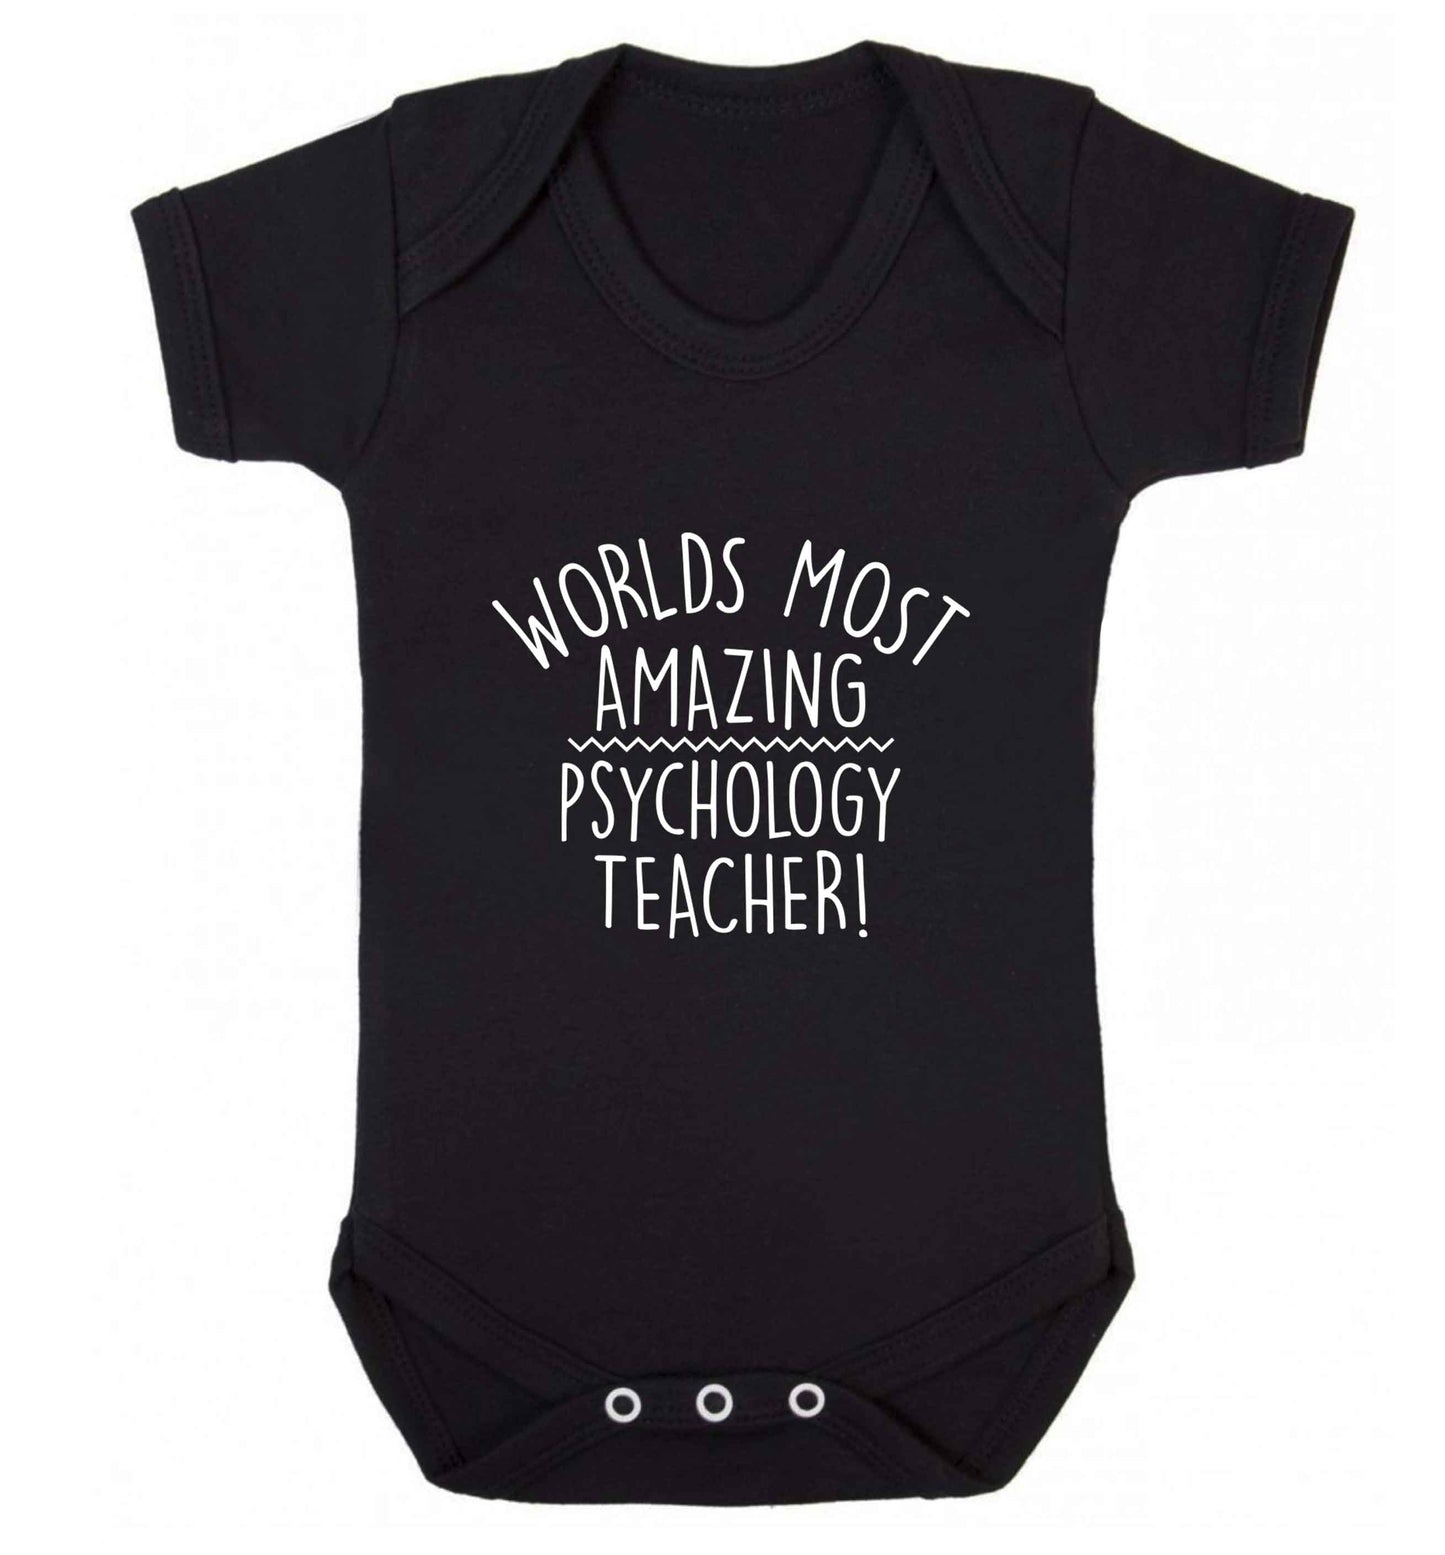 Worlds most amazing psychology teacher baby vest black 18-24 months